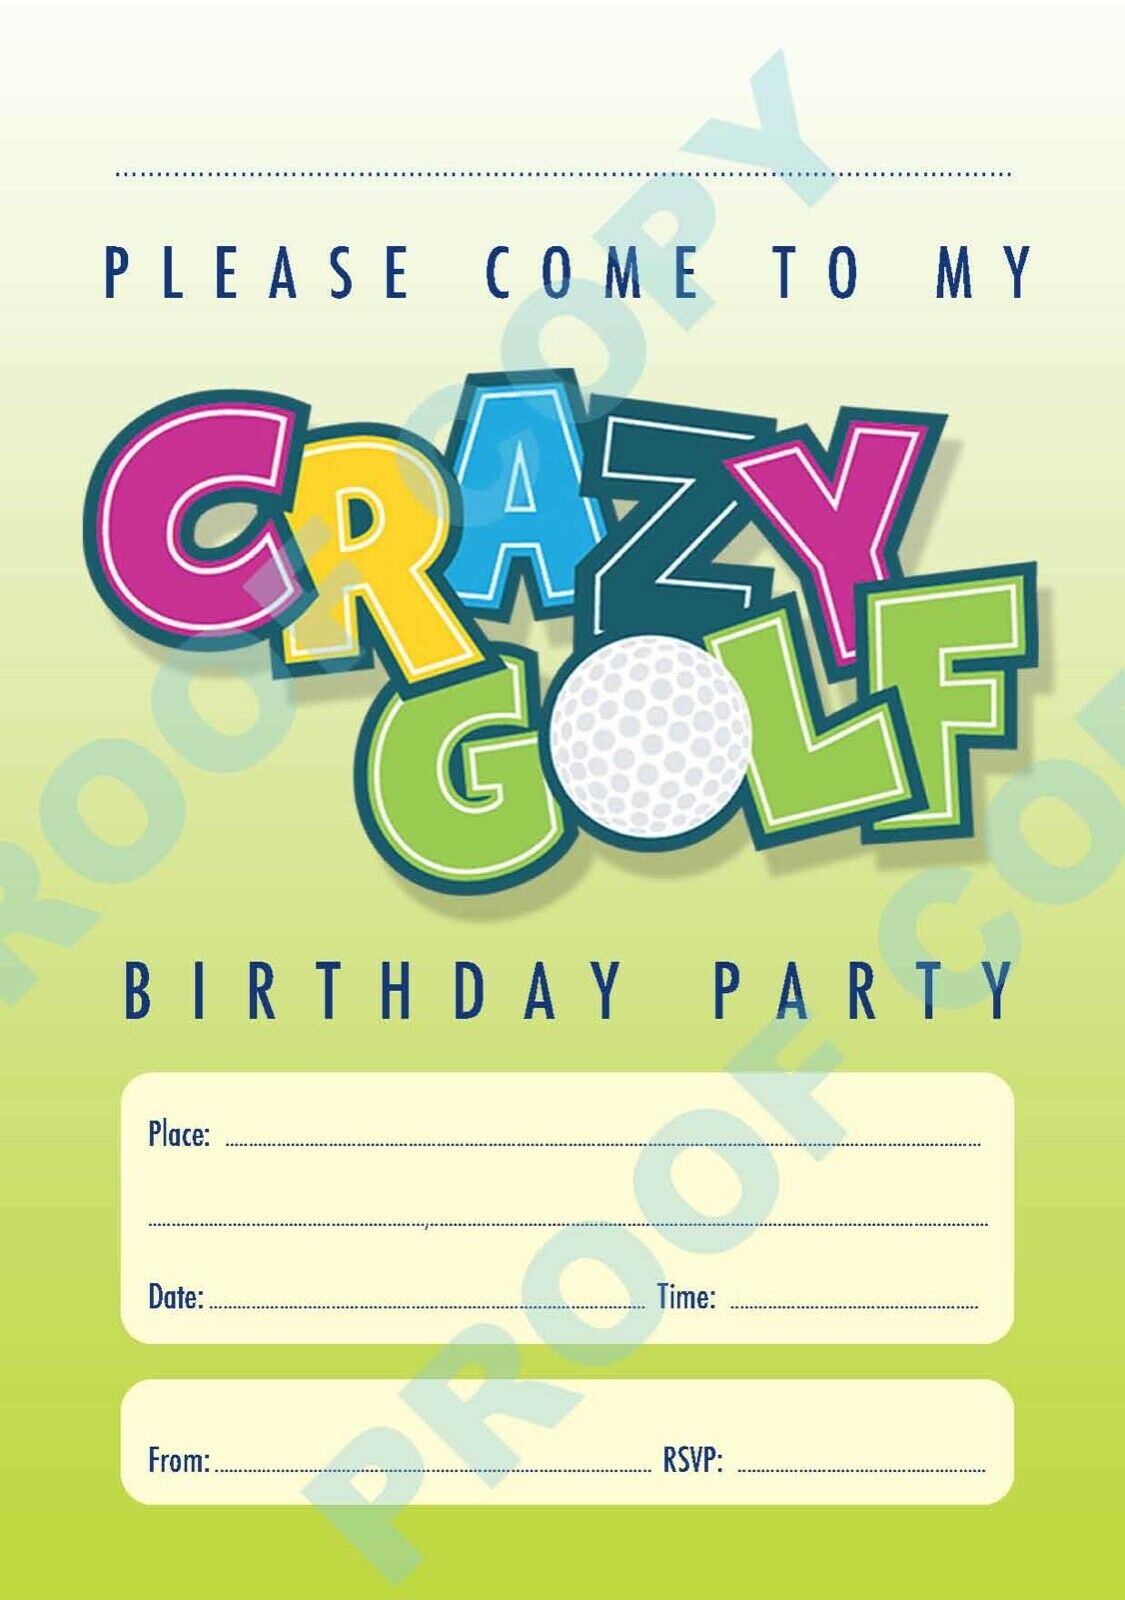 #67 Crazy Golf Invitations x10